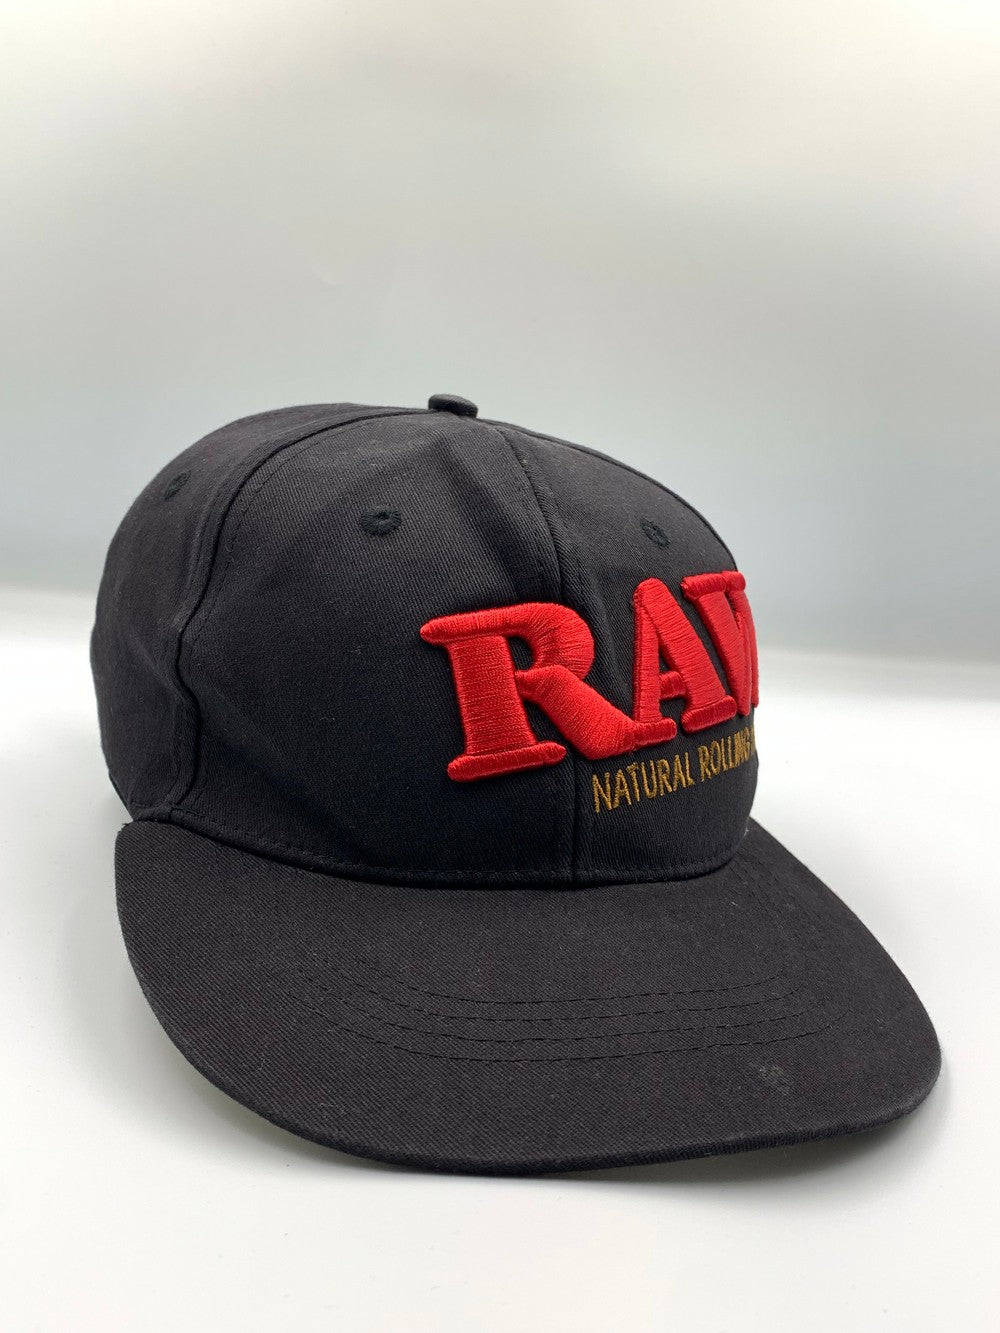 Raw Branded Original Branded Caps For Men